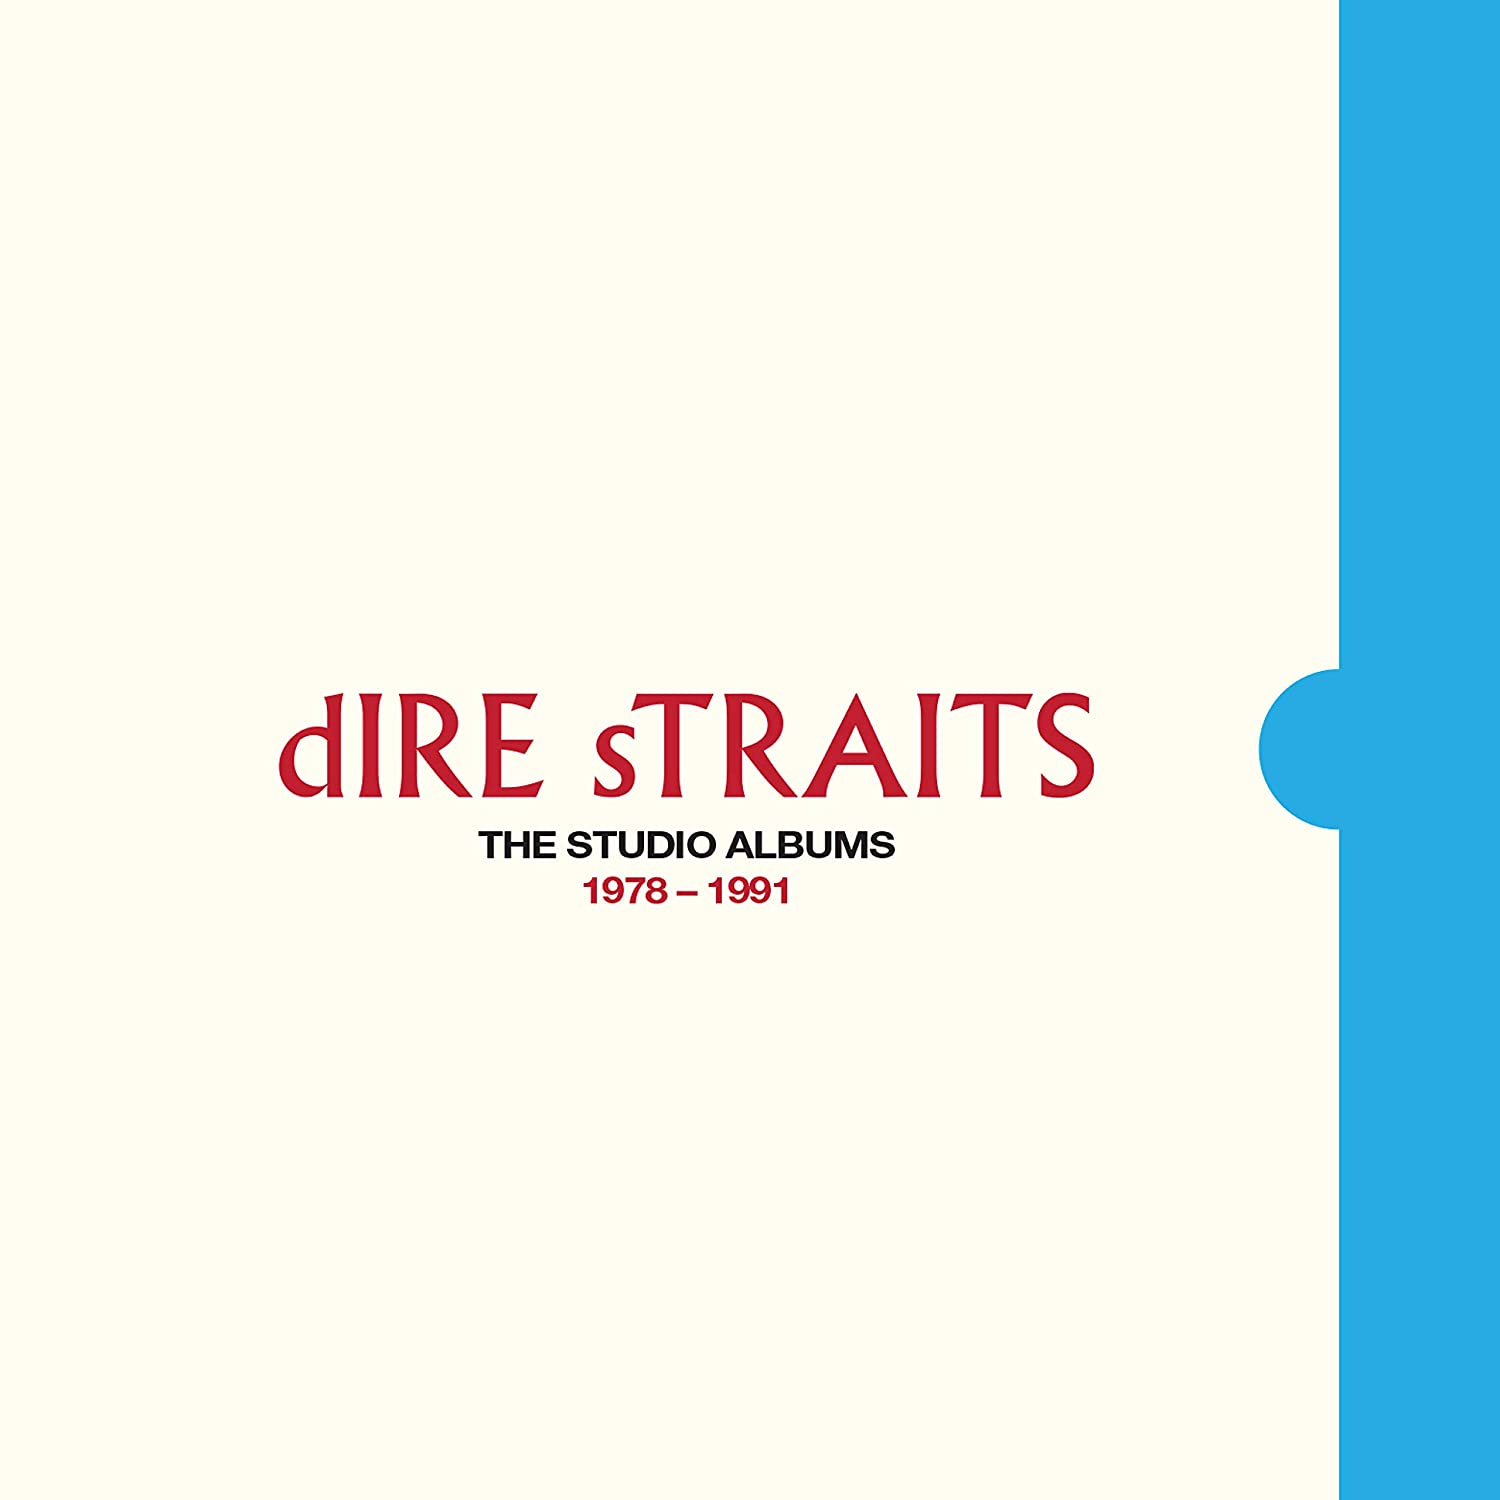 Dire Straits / The Studio Albums 1978 – 1991 box set is finally